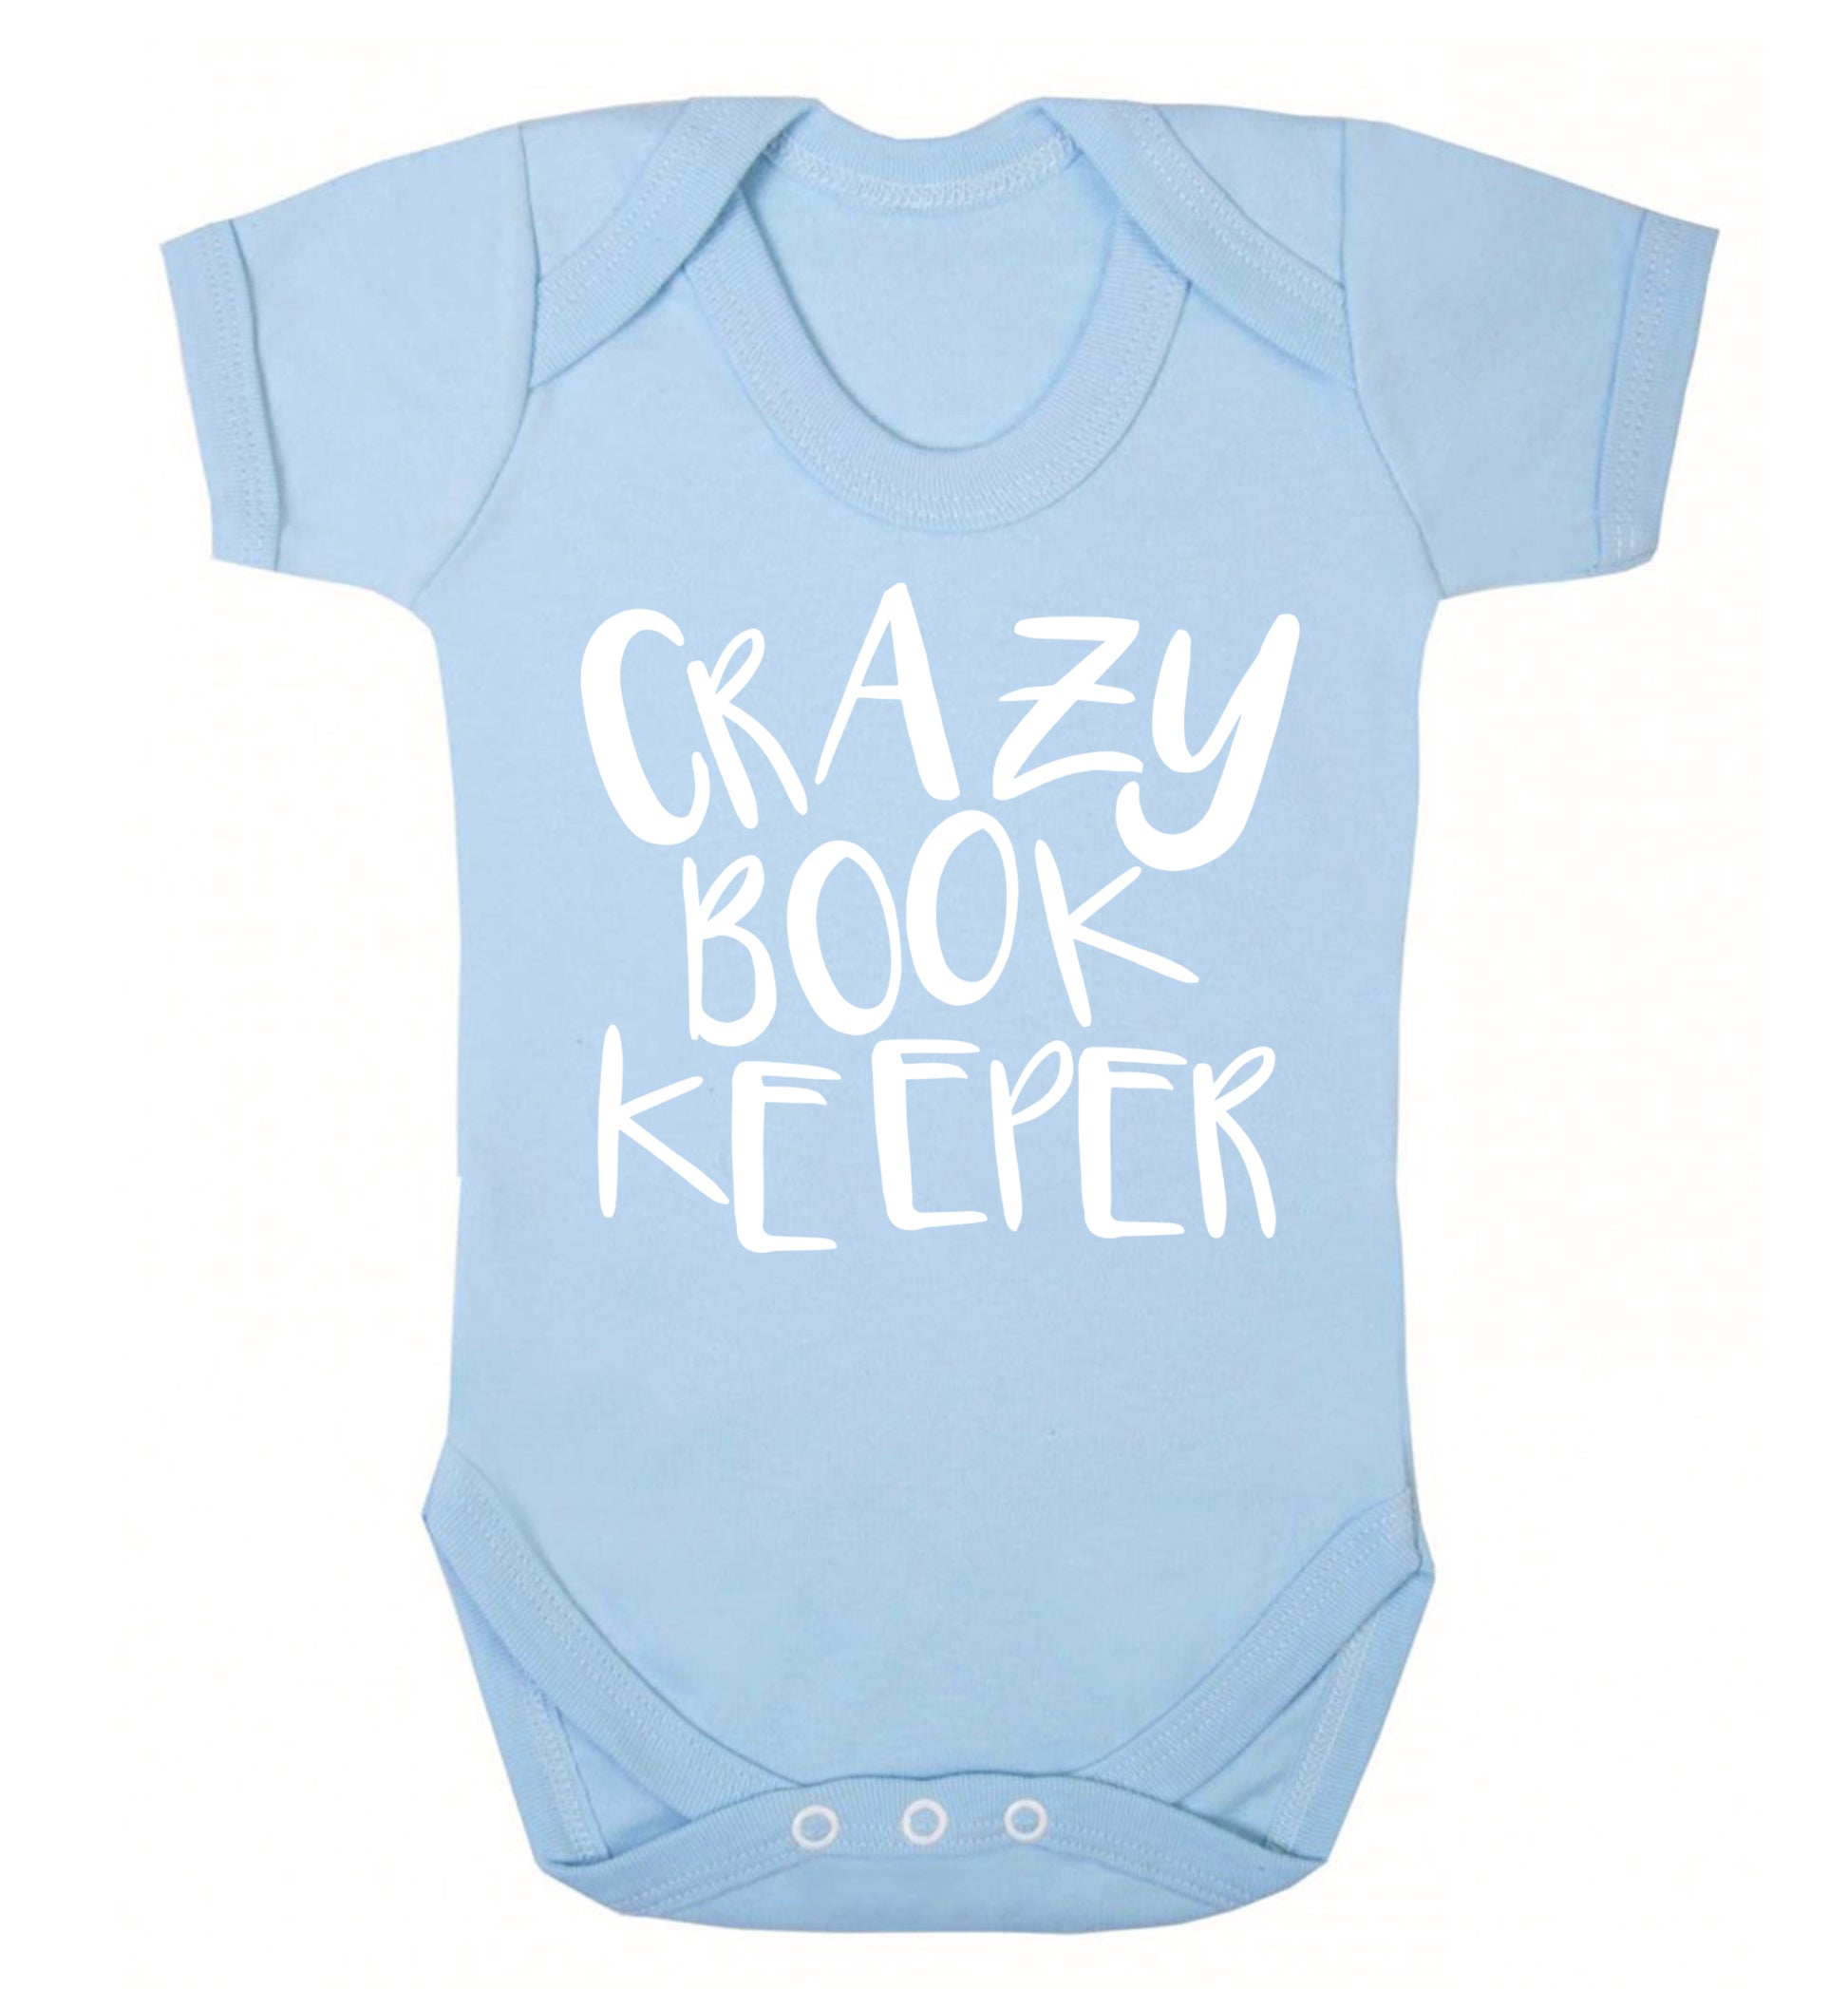 Crazy bookkeeper Baby Vest pale blue 18-24 months